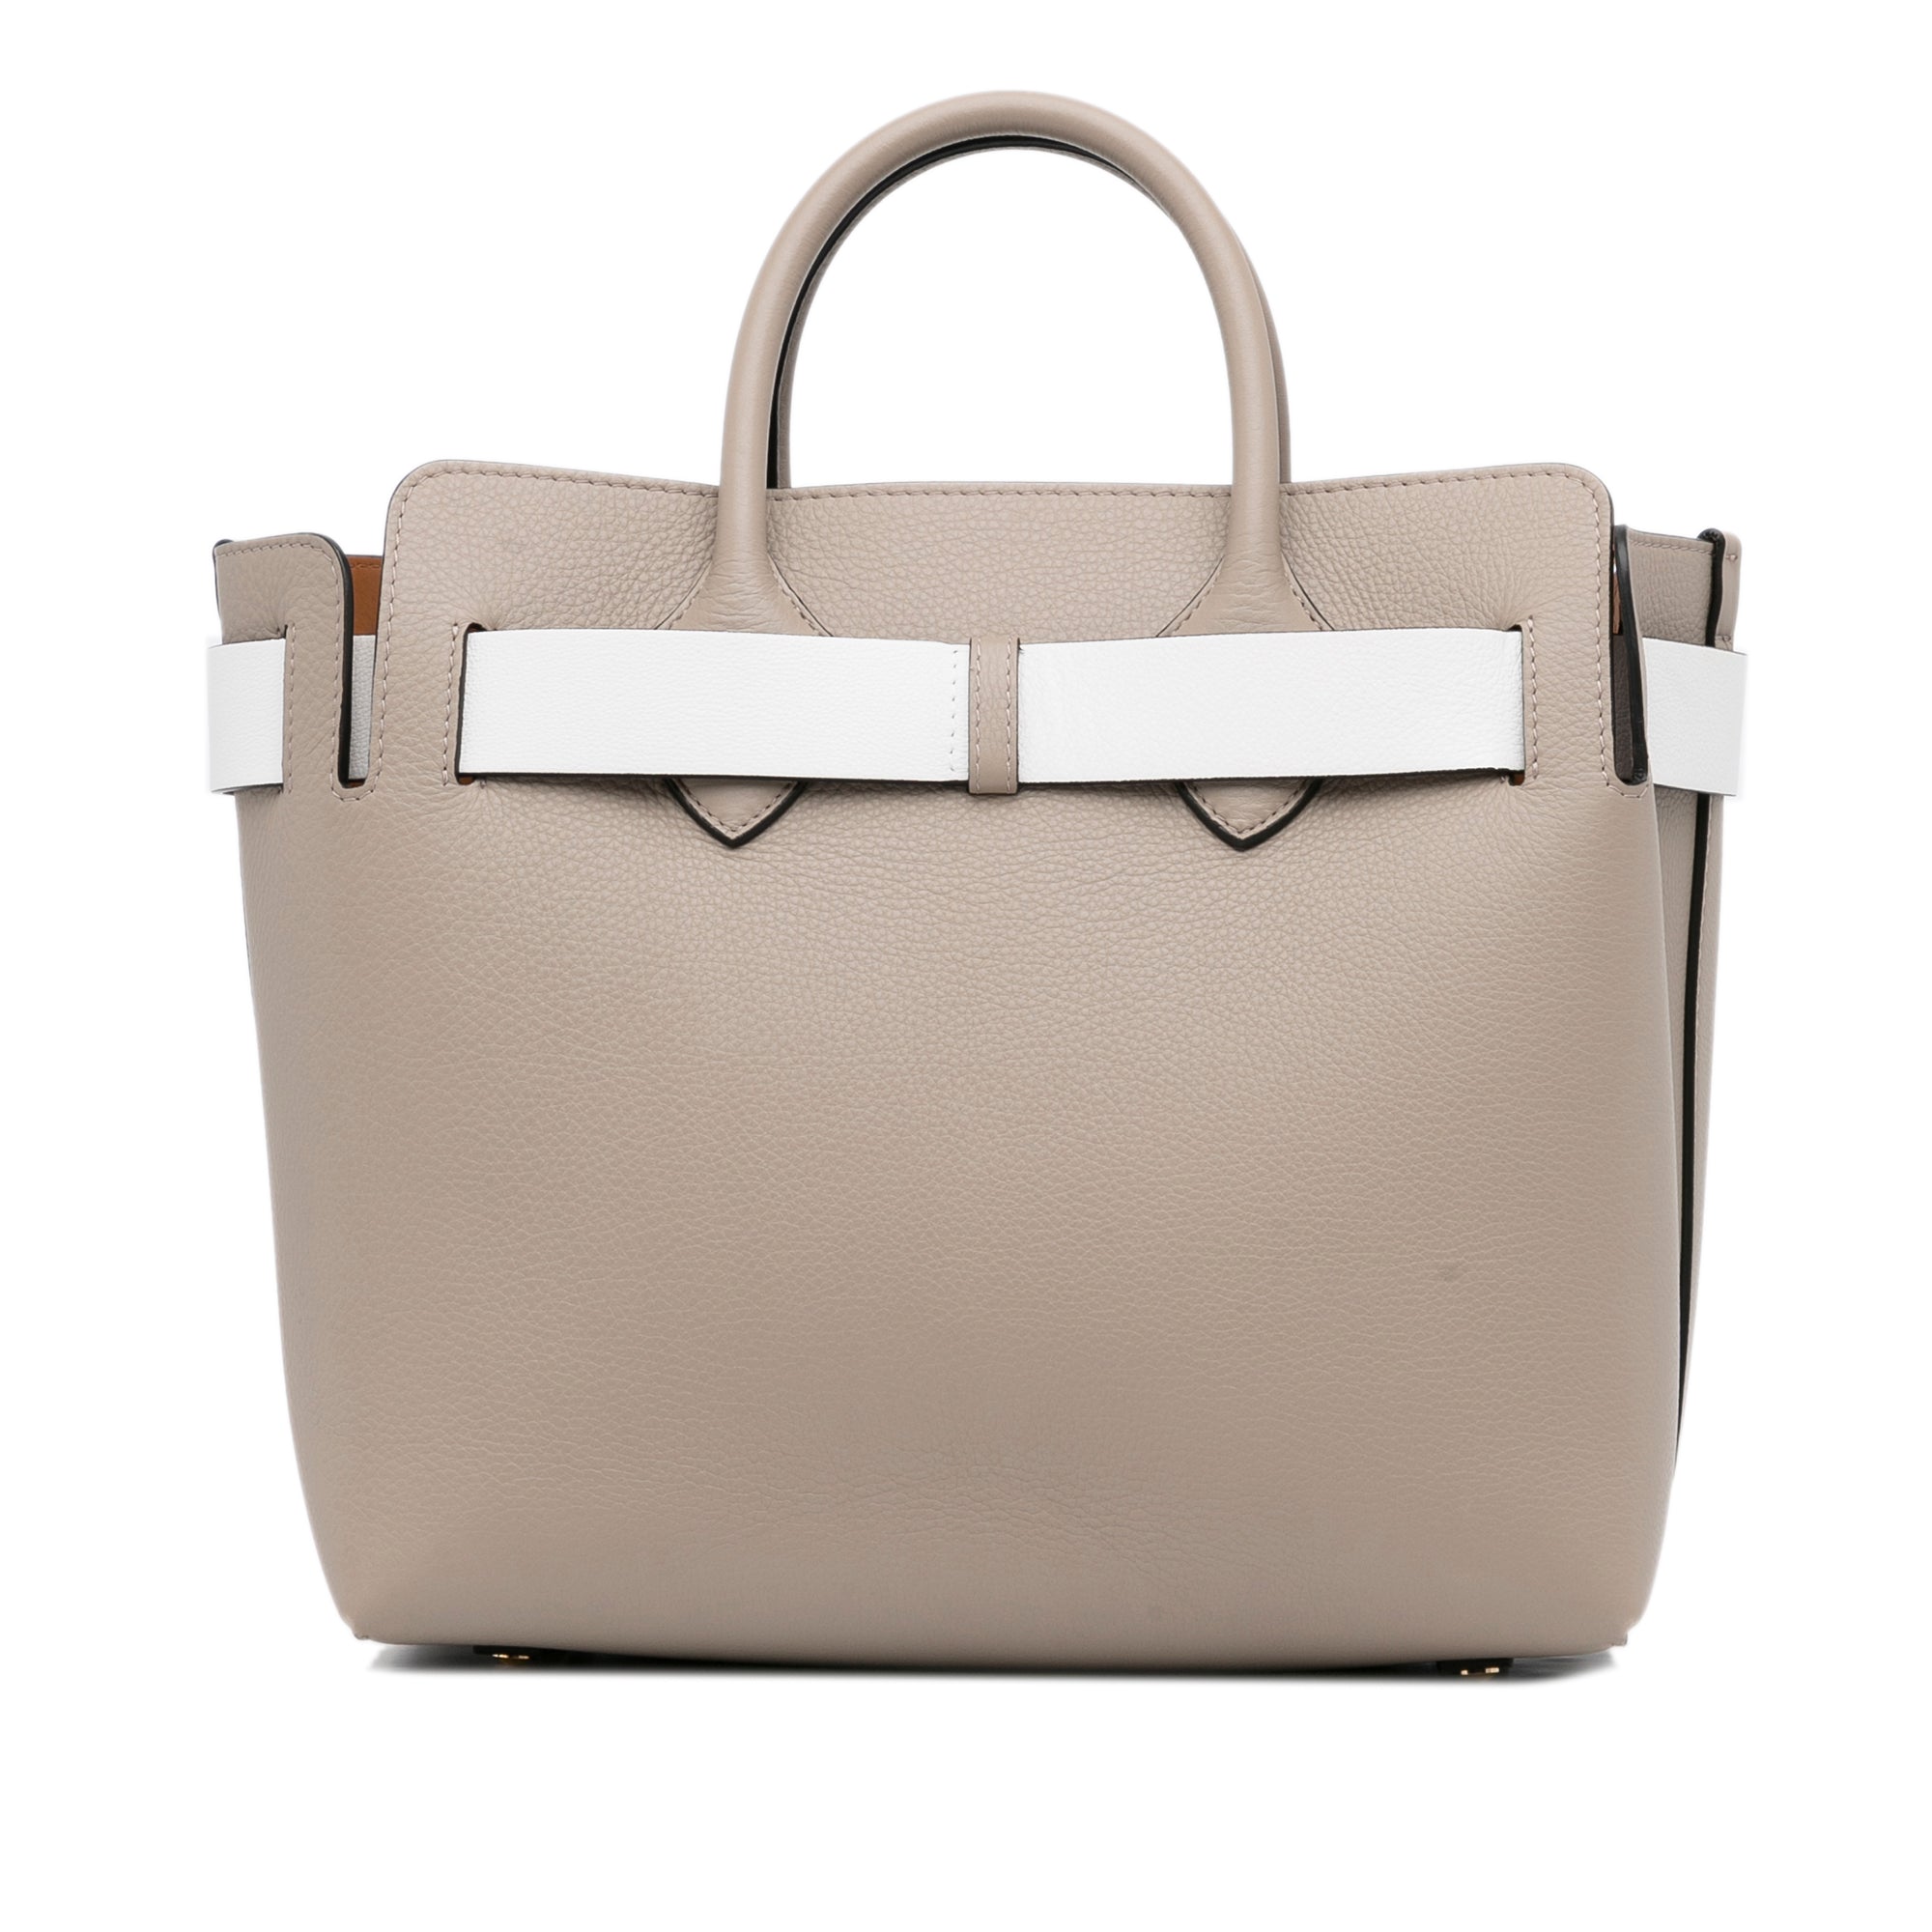 Burberry Belt Handbag Medium Light Brown Leather